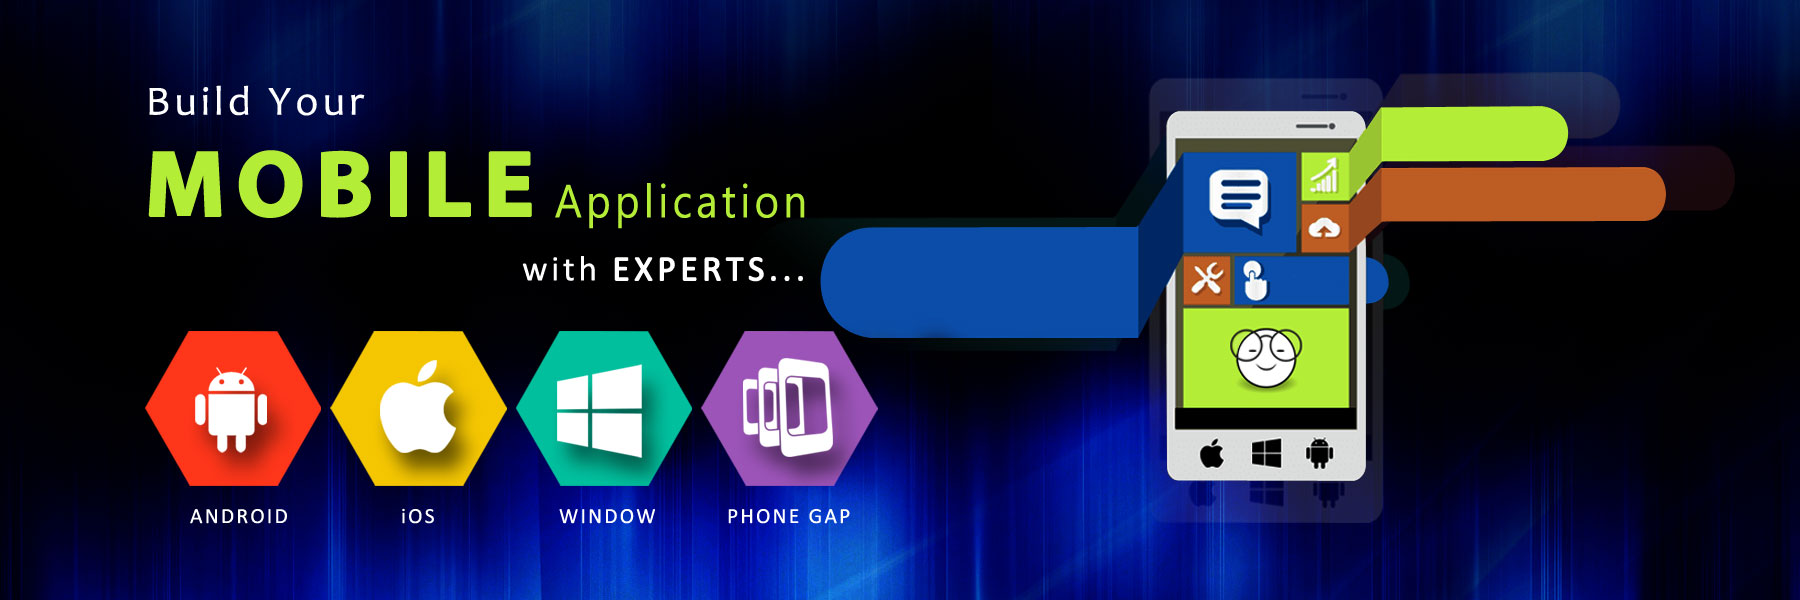 Mobile-application